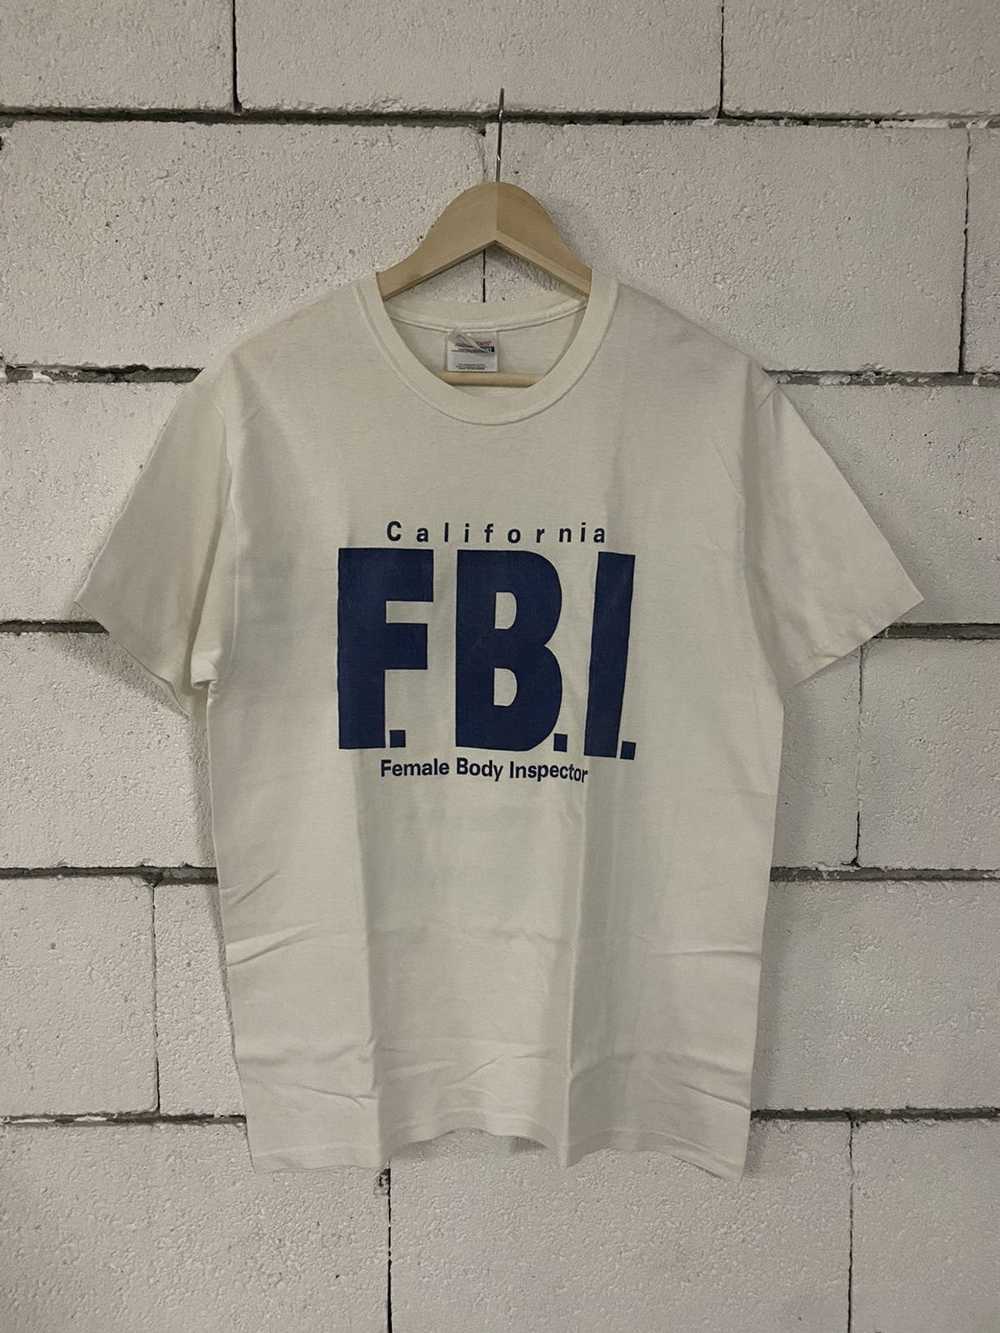 Vintage FBI female body inspector t shirt - image 1